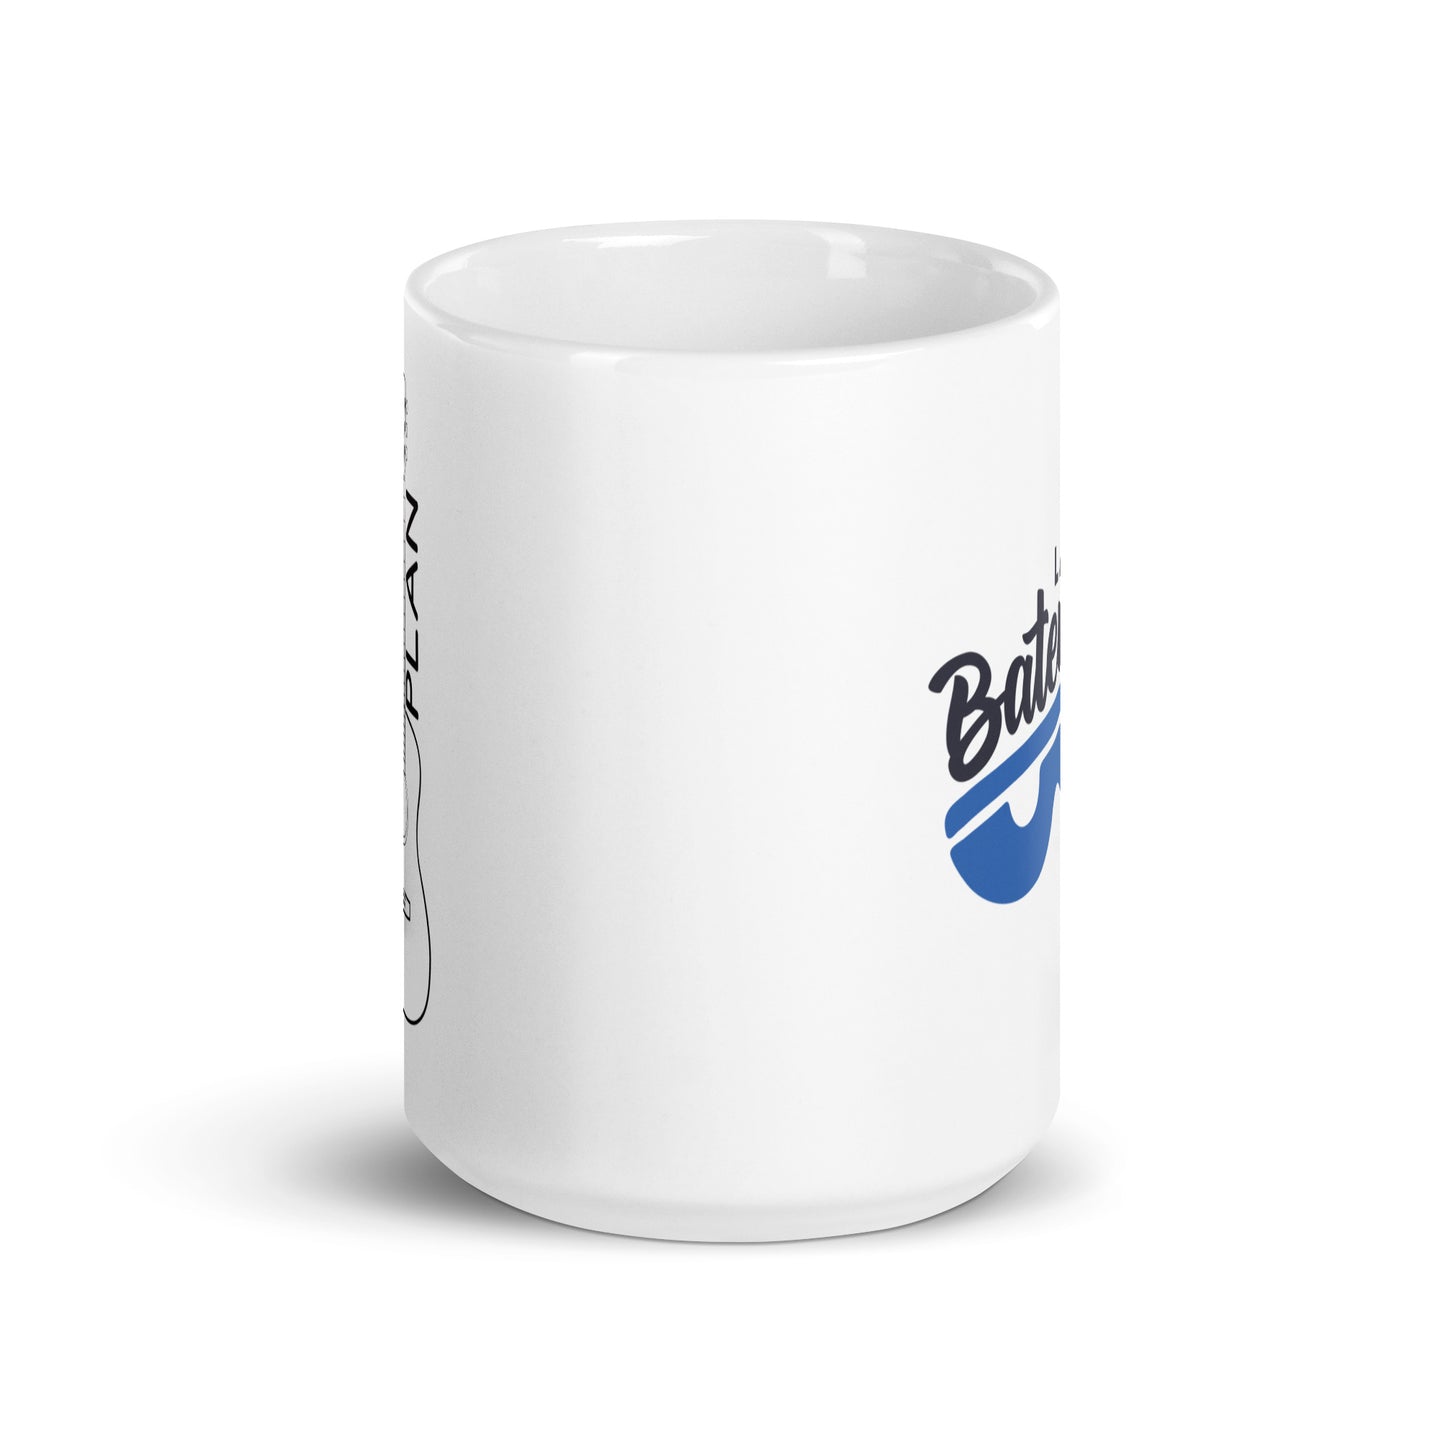 My Retirement Plan - White glossy mug